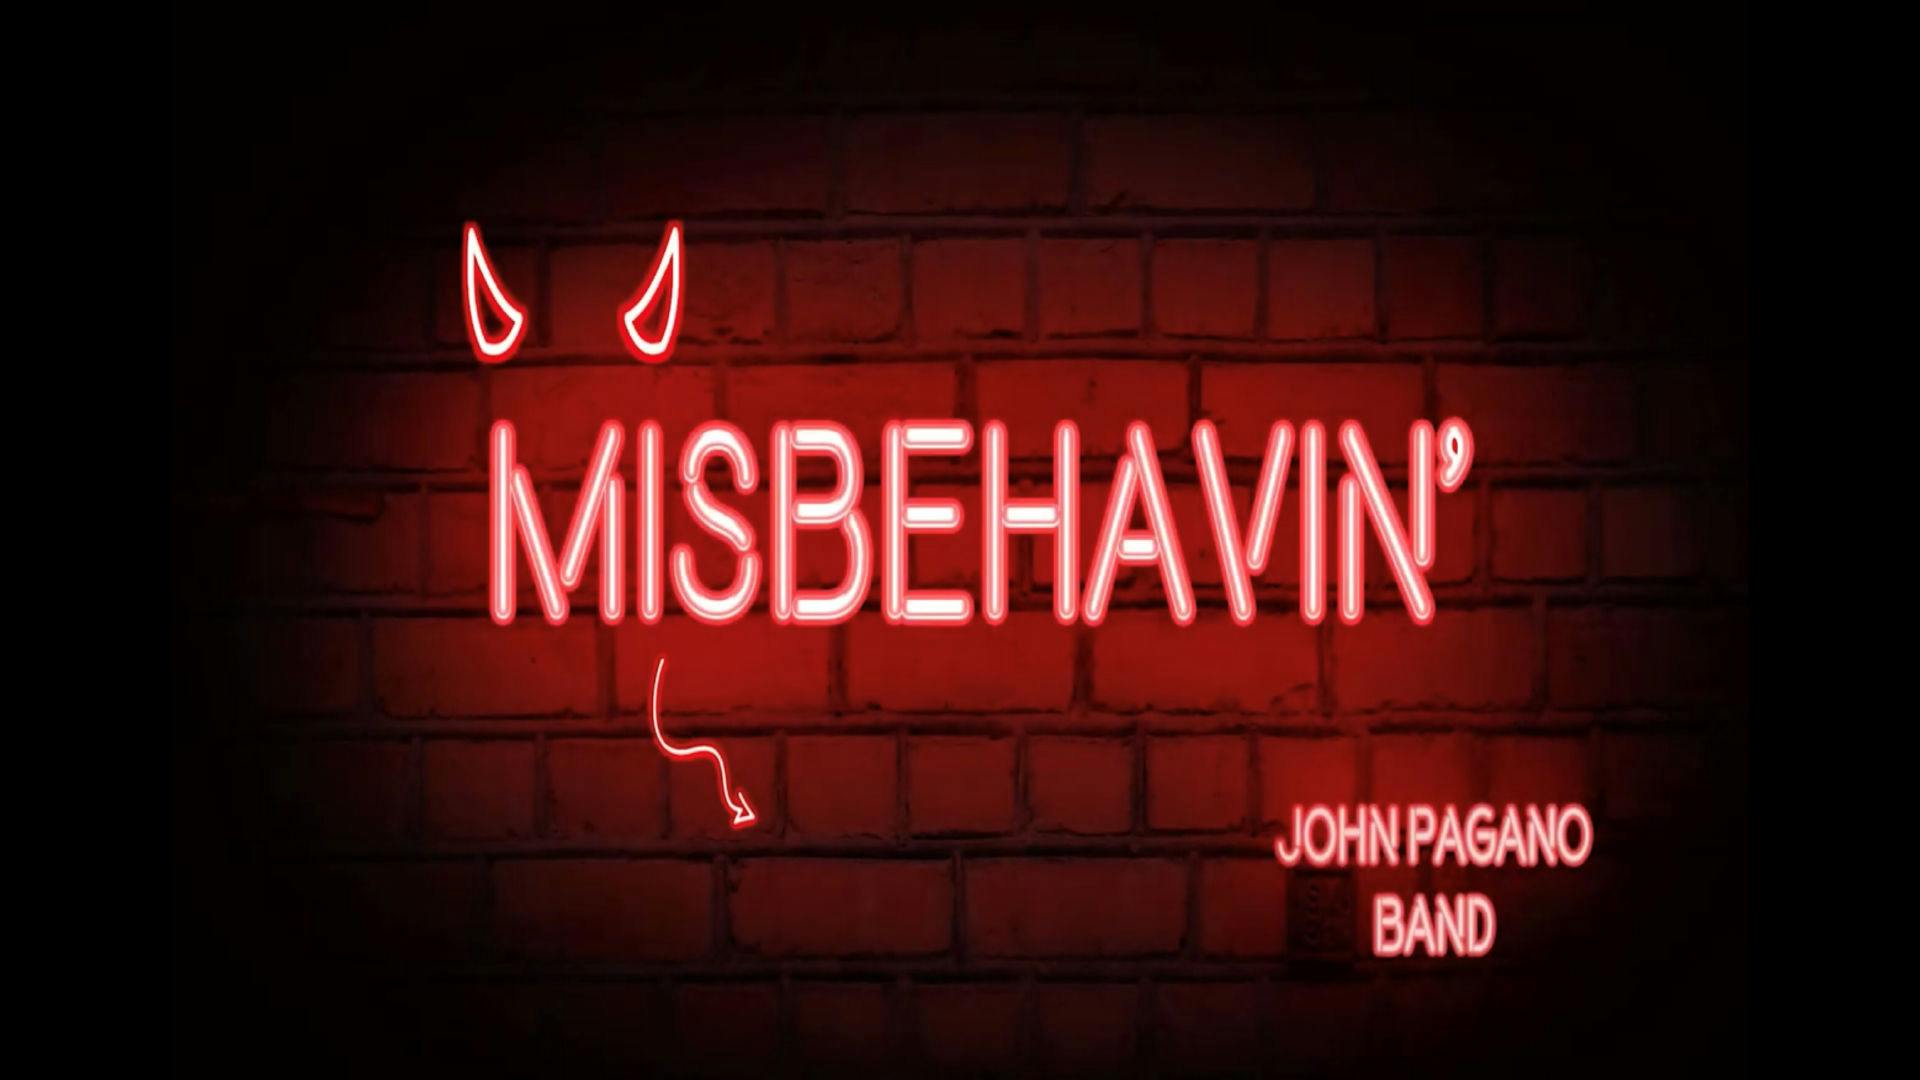 John Pagano Band - Misbehavin' [Official Video] Banner Image